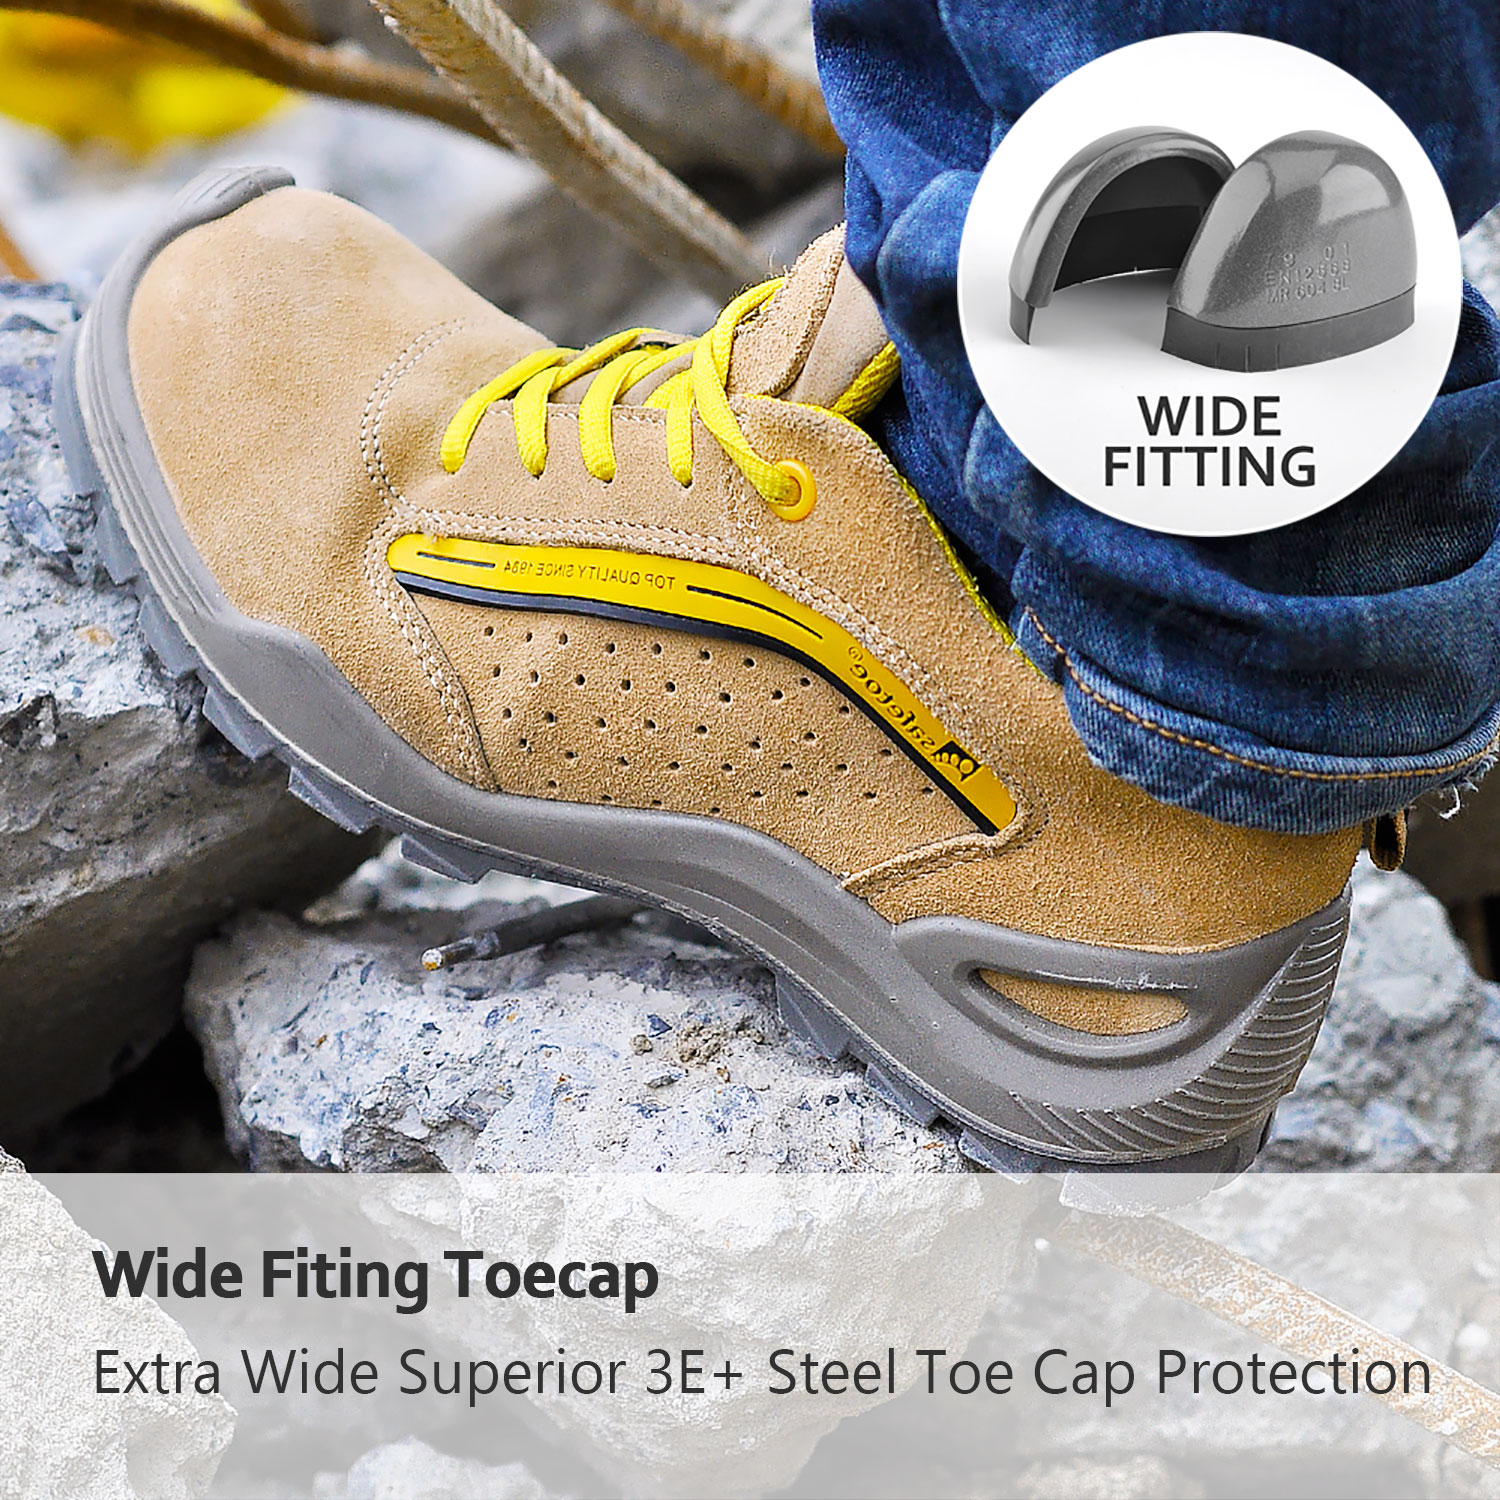 Zapatos clasificados EH, zapatos de seguridad dieléctricos aislantes anti eléctricos para hombres